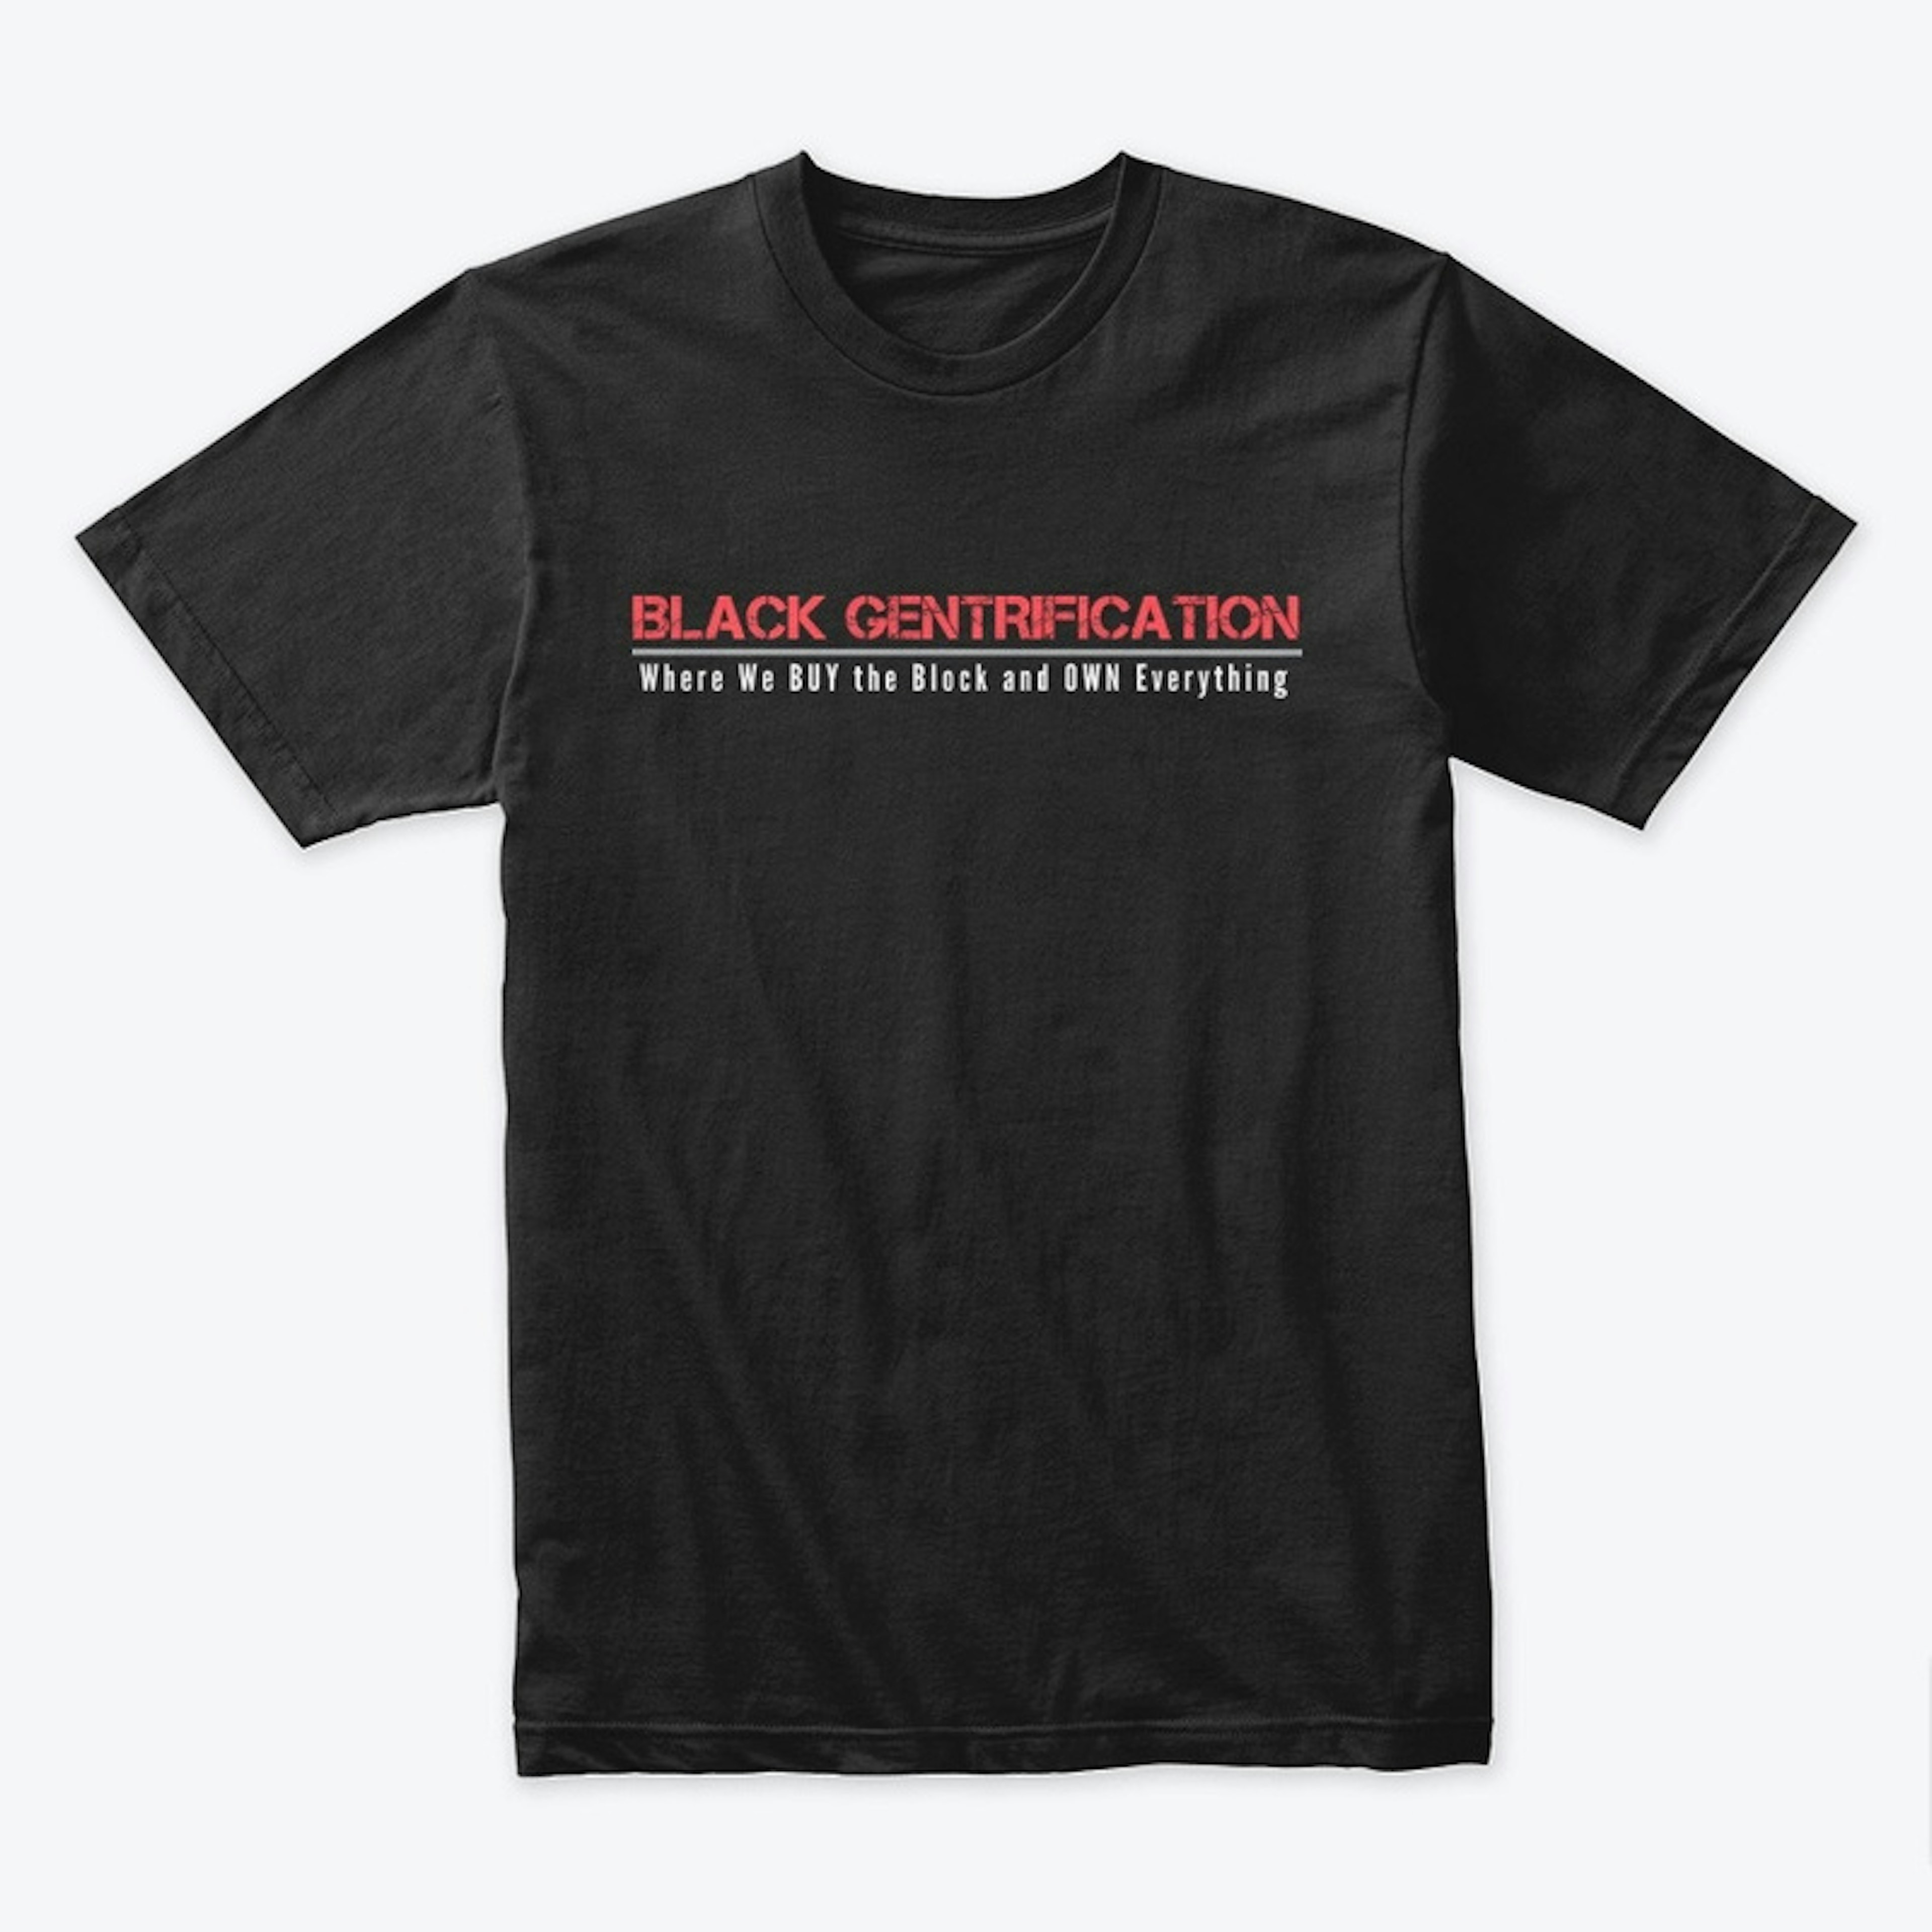 Black Gentrification